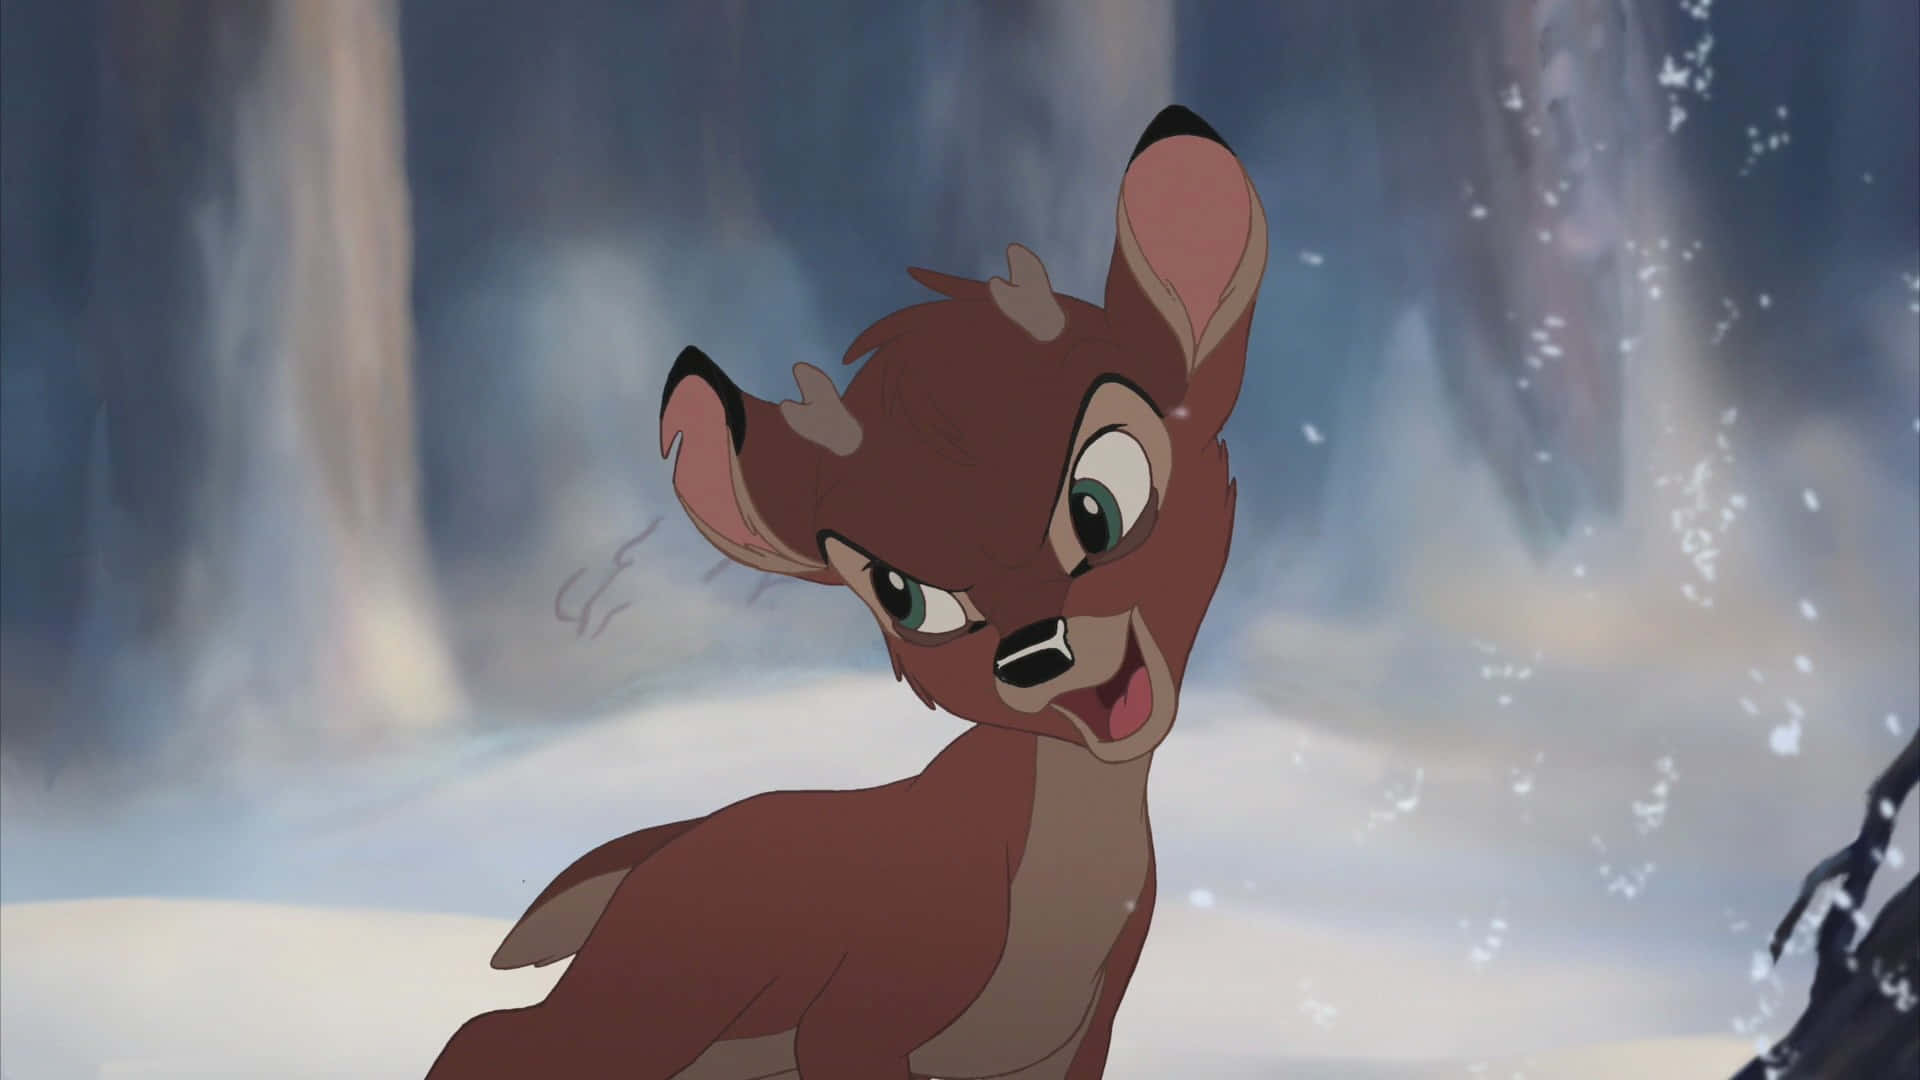 Bambi,en Disney Klassiker, Som Har Fanget Hjerter I Generationer.